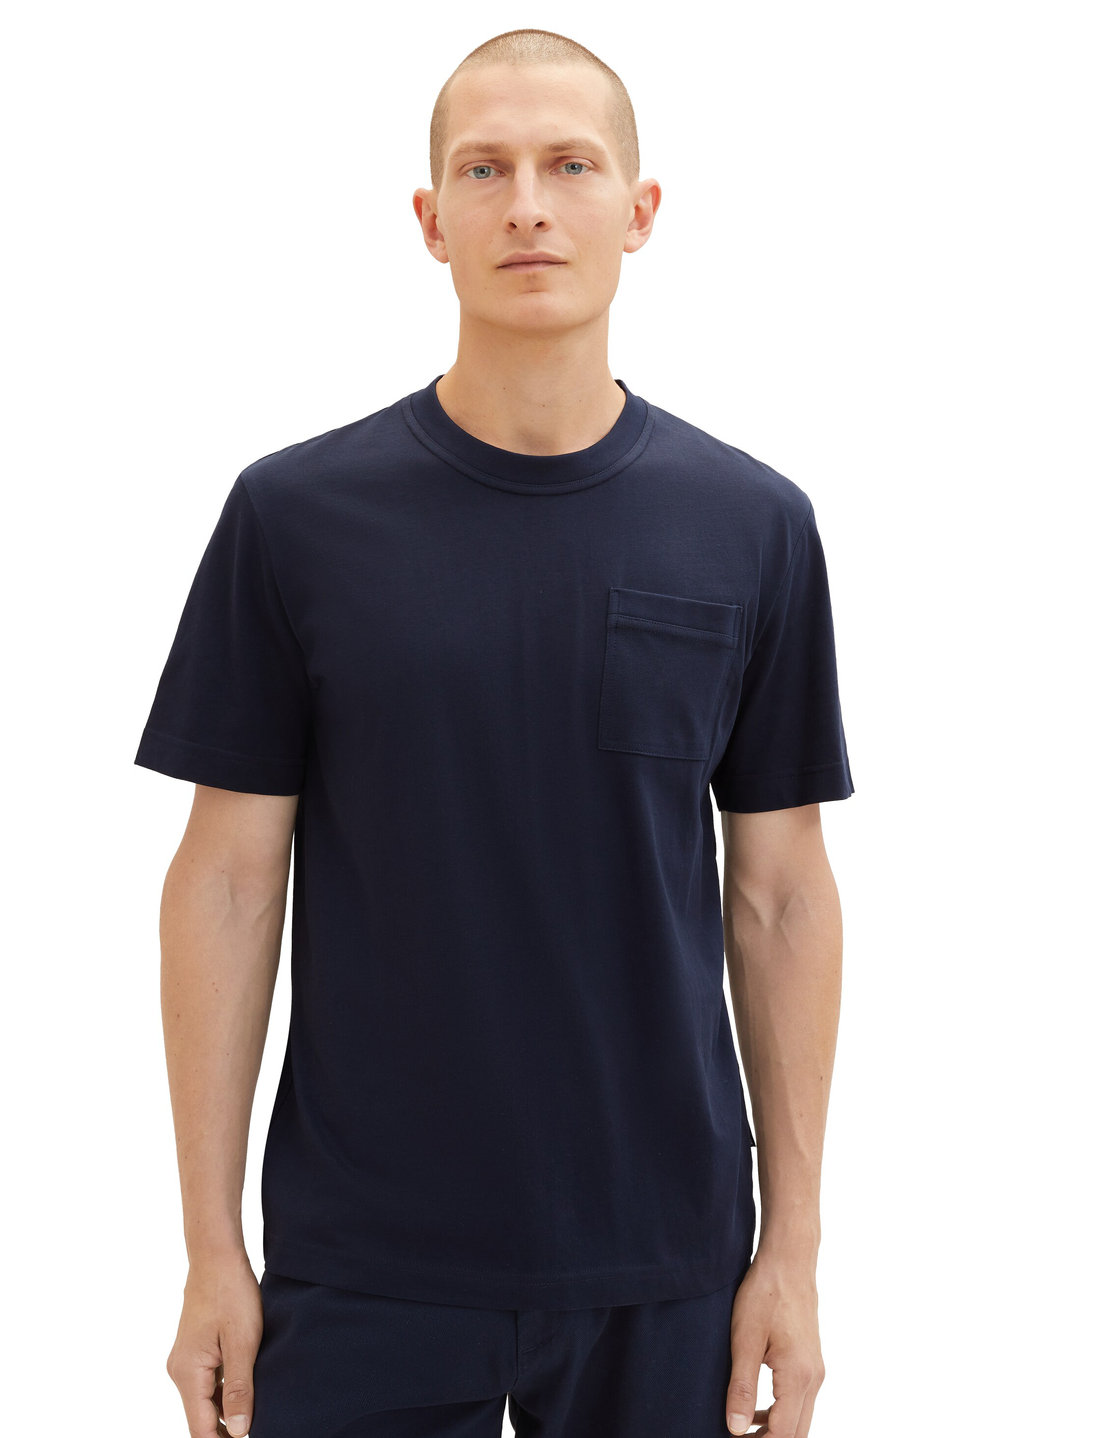 Tom Tailor Basic T-shirt With Pocket – t-shirts – shop at Booztlet